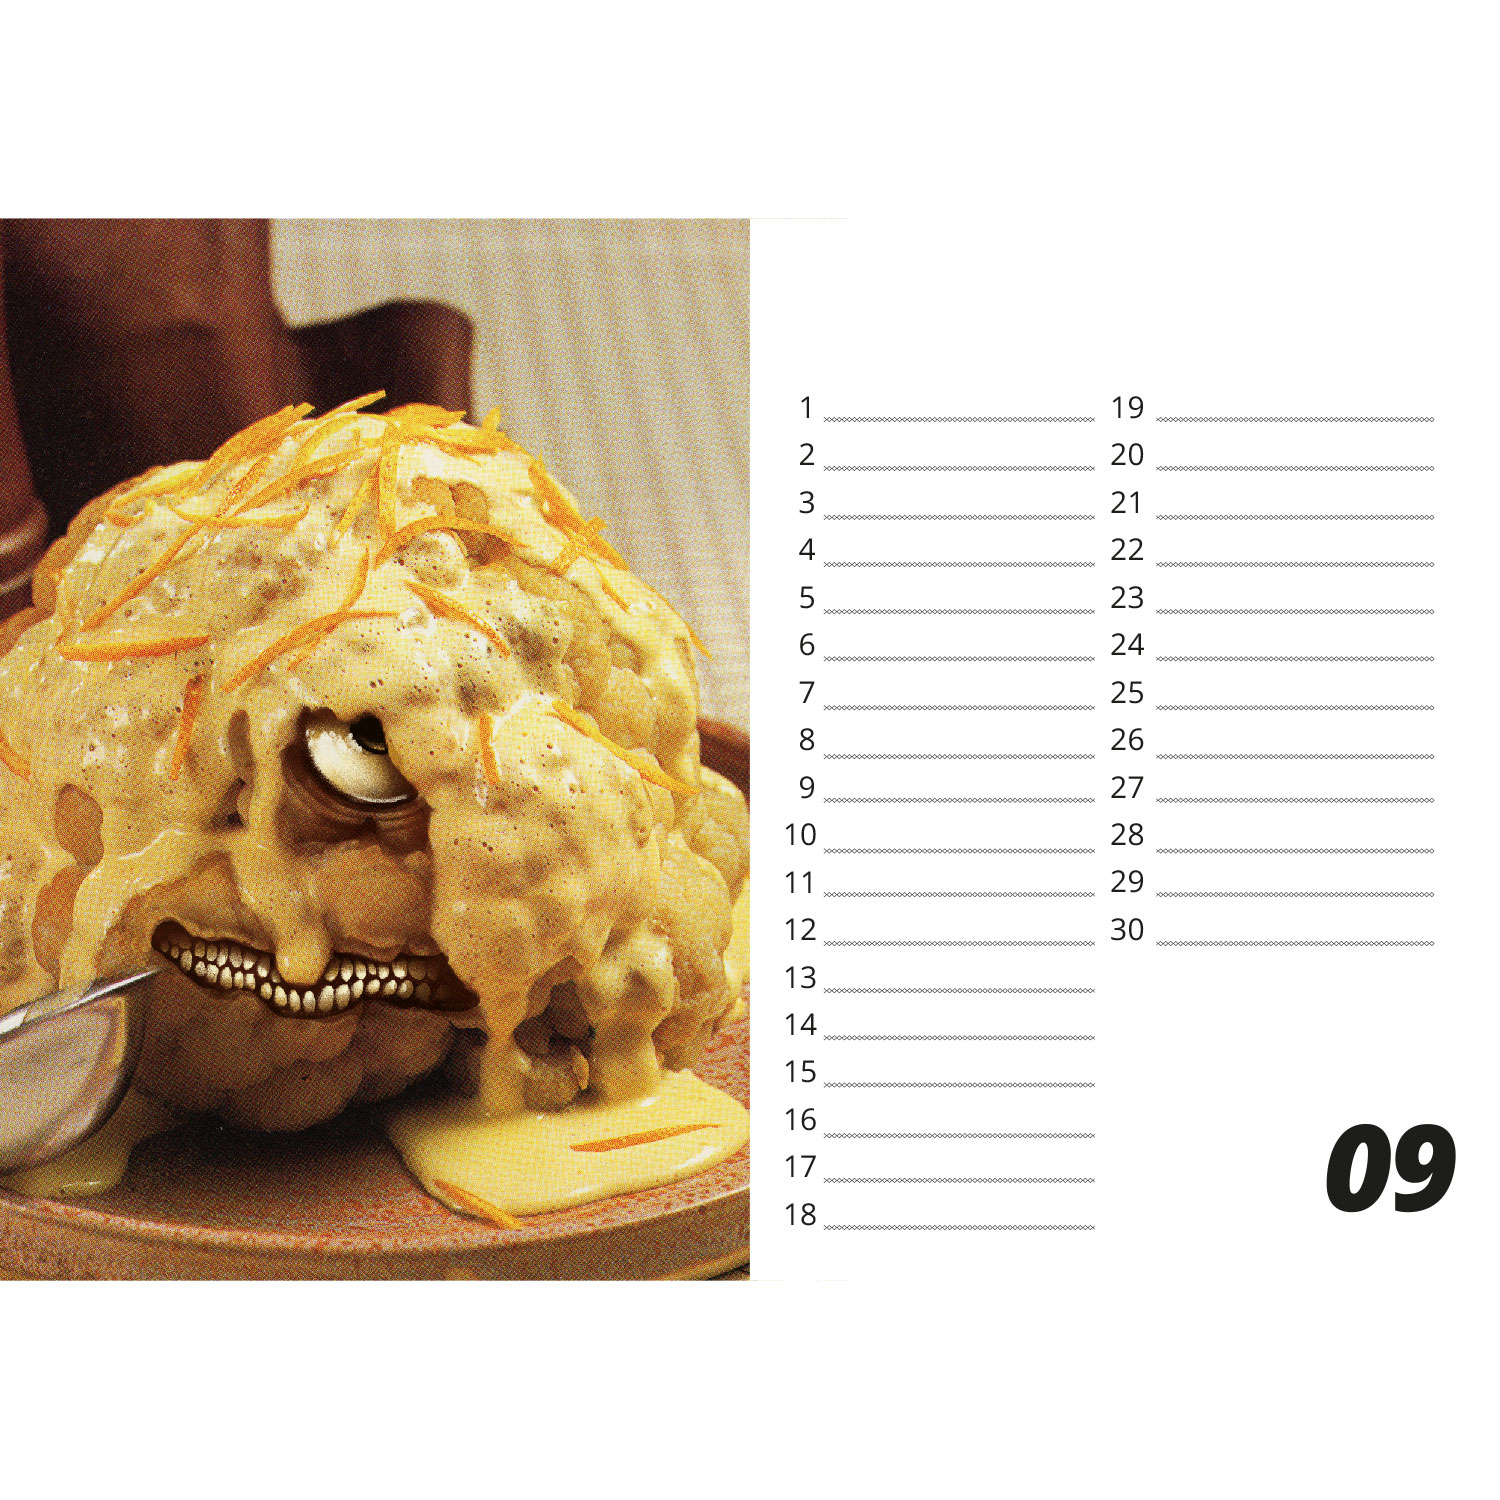 You are what you eat desk calendar - A5 landscape format